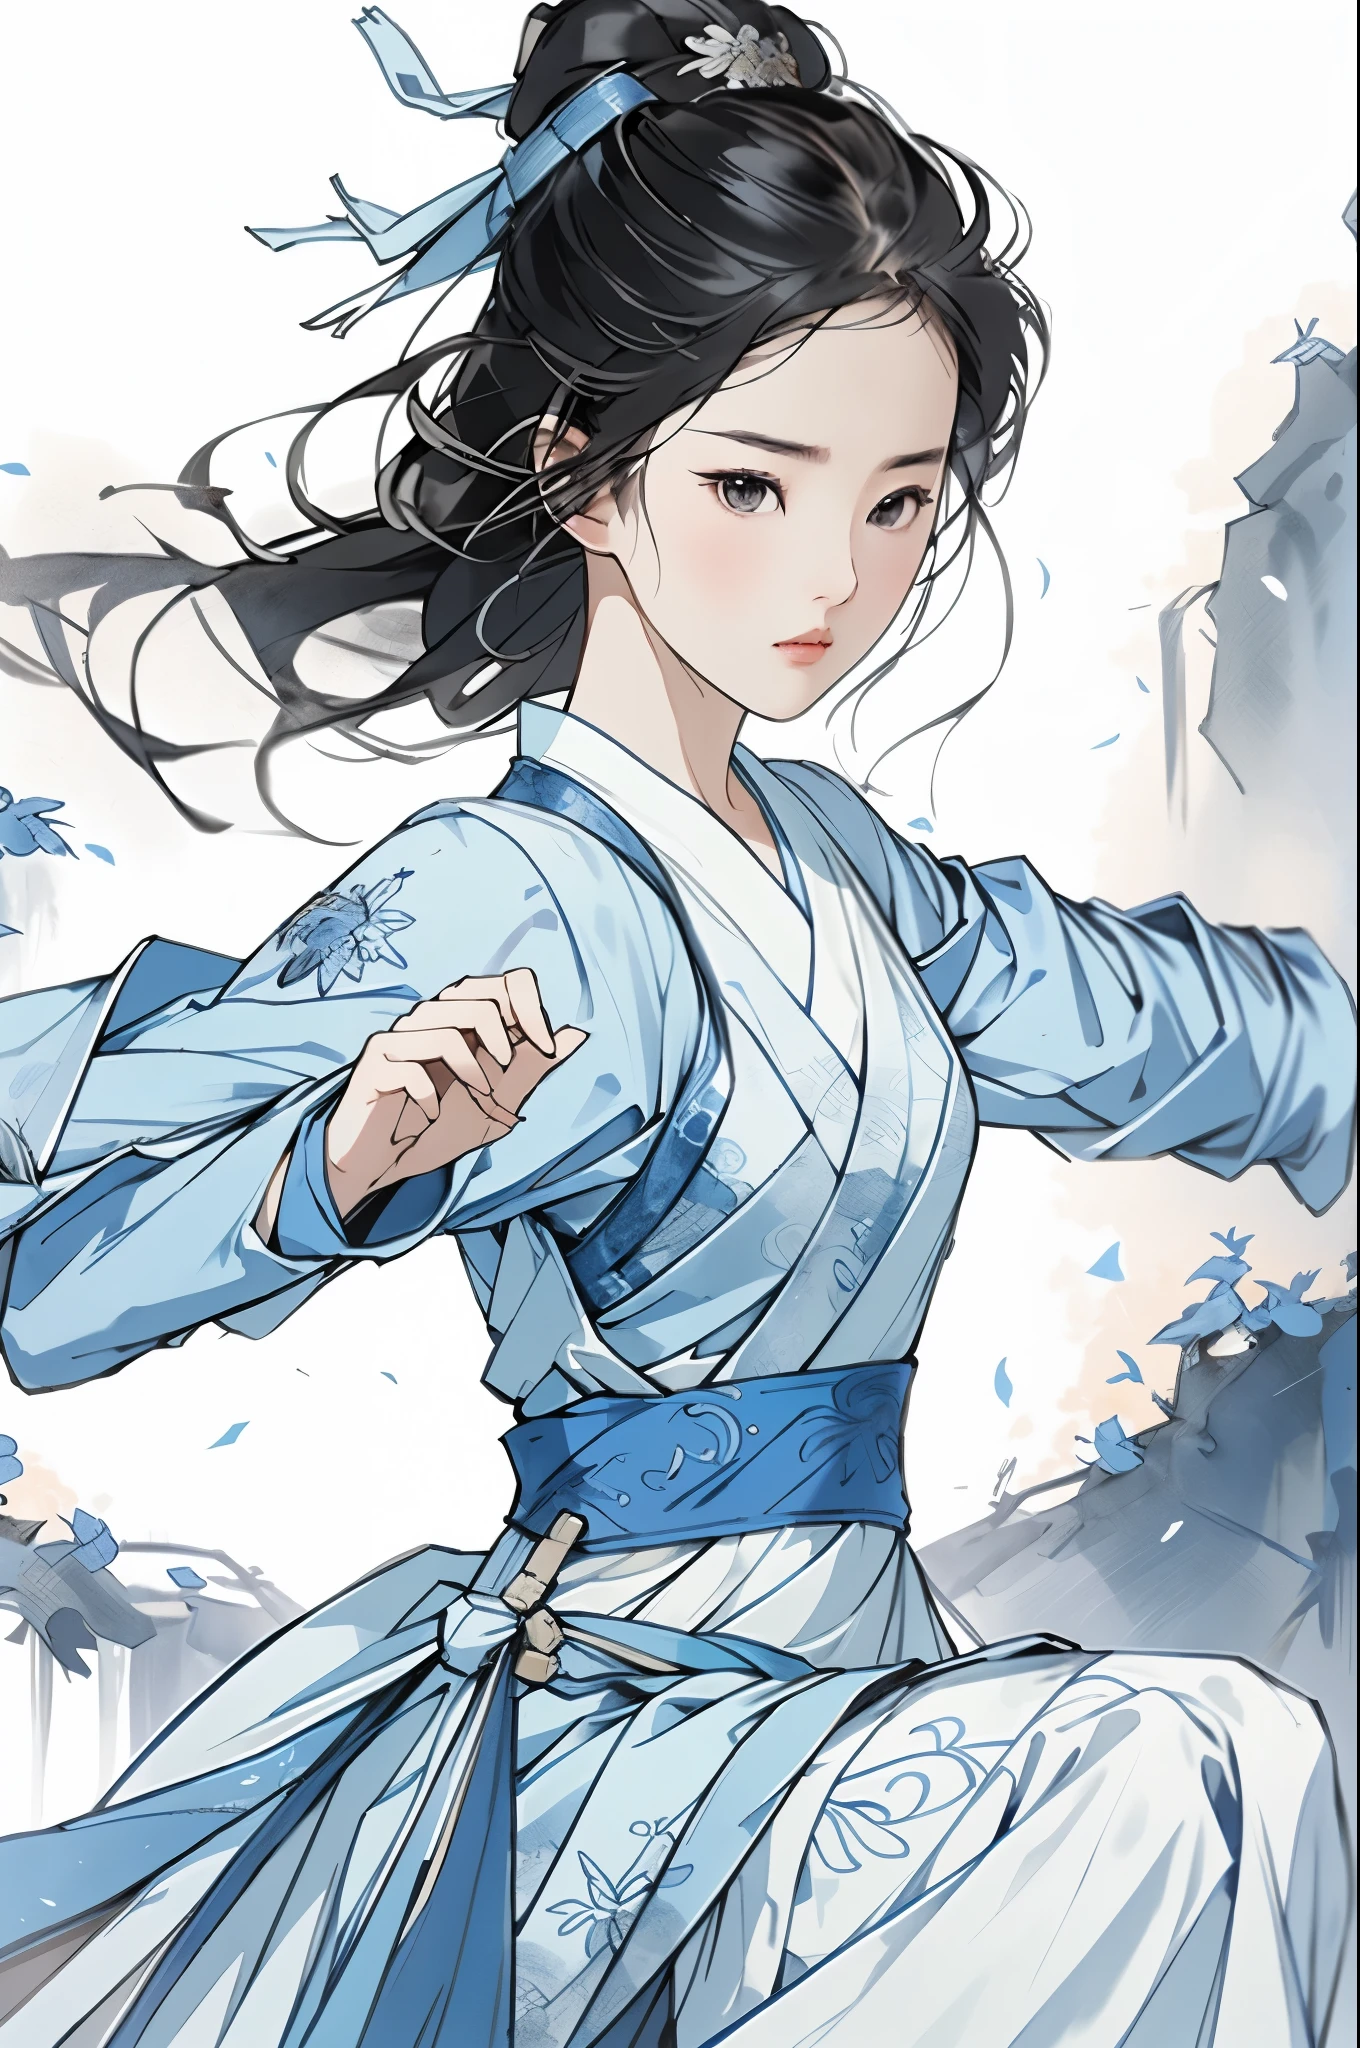 liuyifei, 1 chica, Solo, vestido chino tradicional azul, pose de kung fu, fondo sencillo, Fondo blanco, Gongbihua